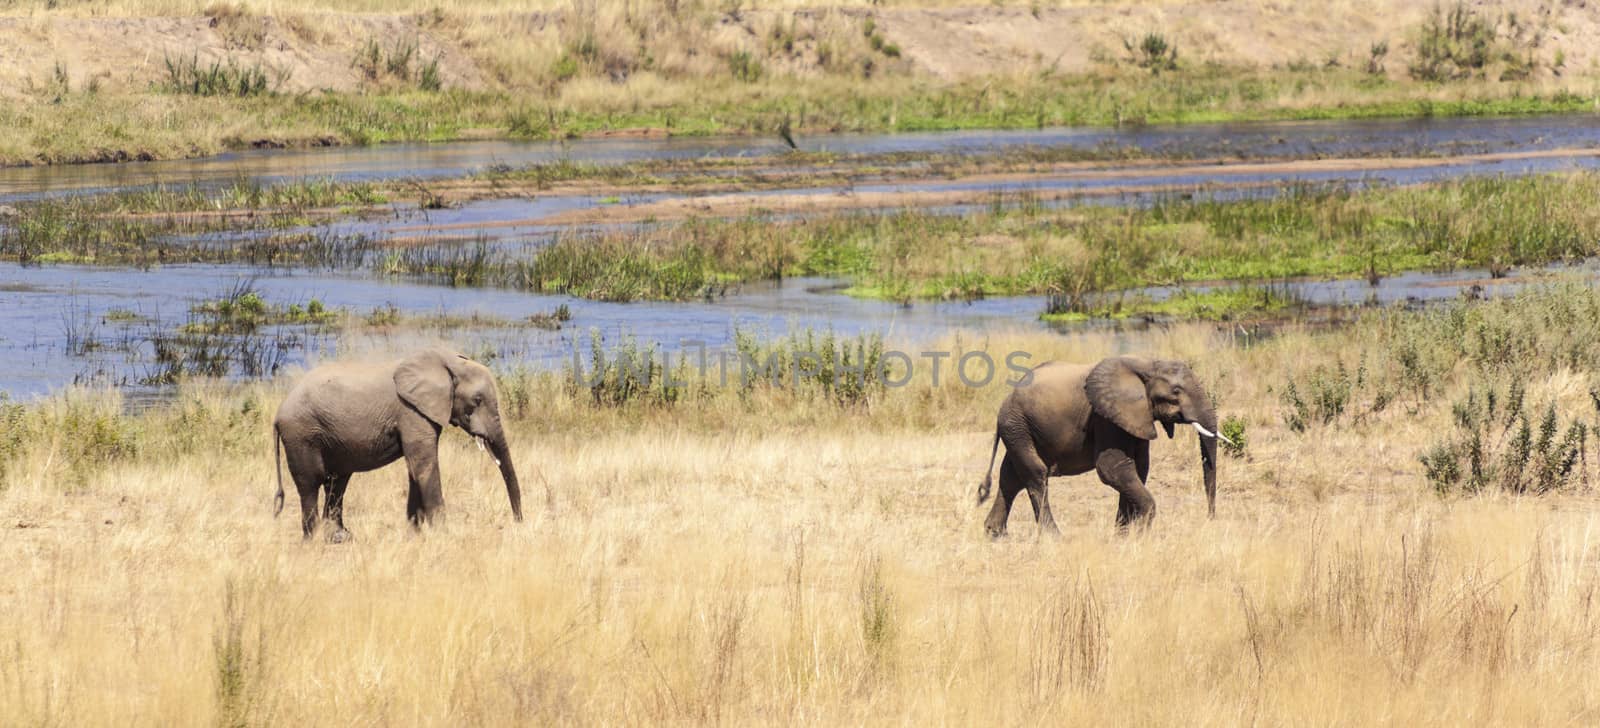 Walking elephants in Tanzania